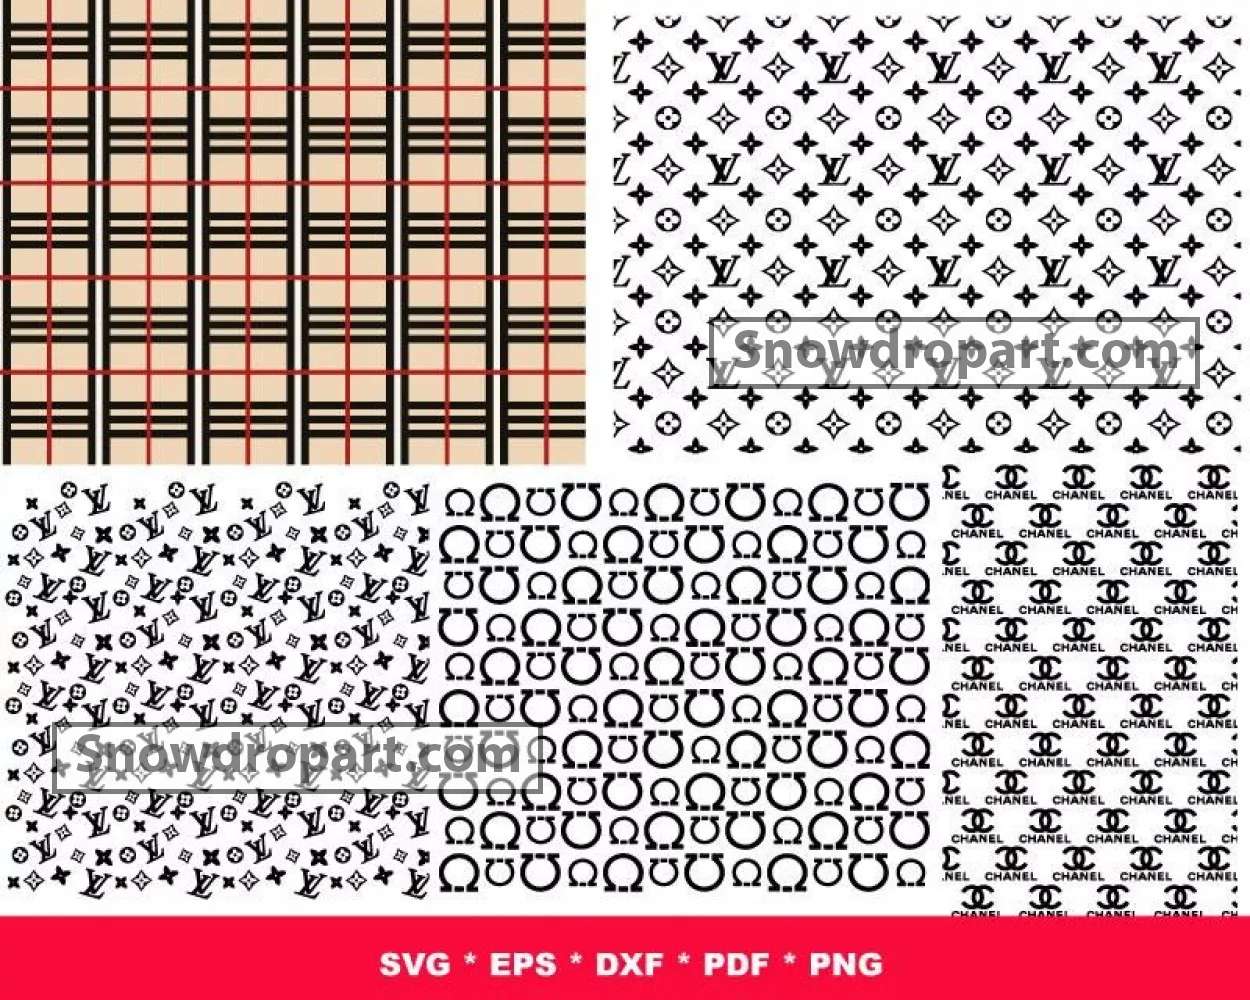 Disney Seamless Pattern Louis Vuitton SVG, PNG, DXF, EPS